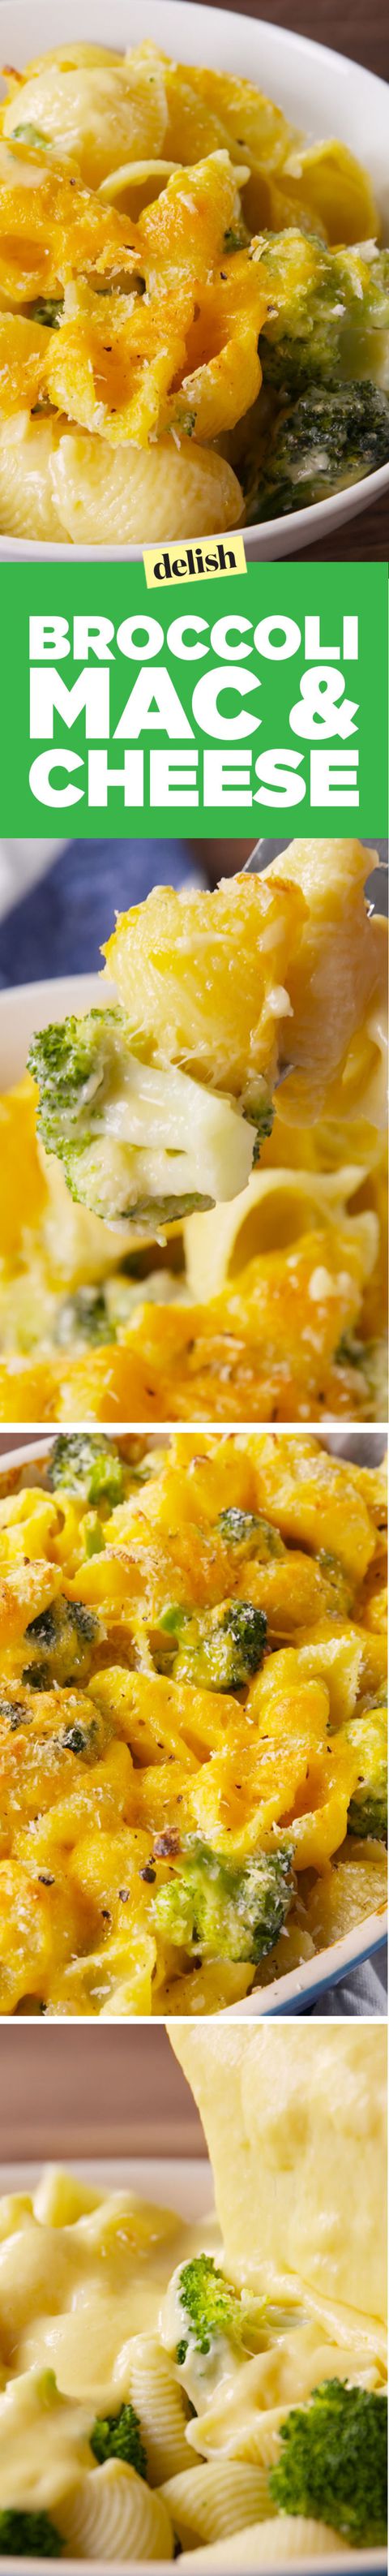 Broccoli Mac & Cheese Pinterest